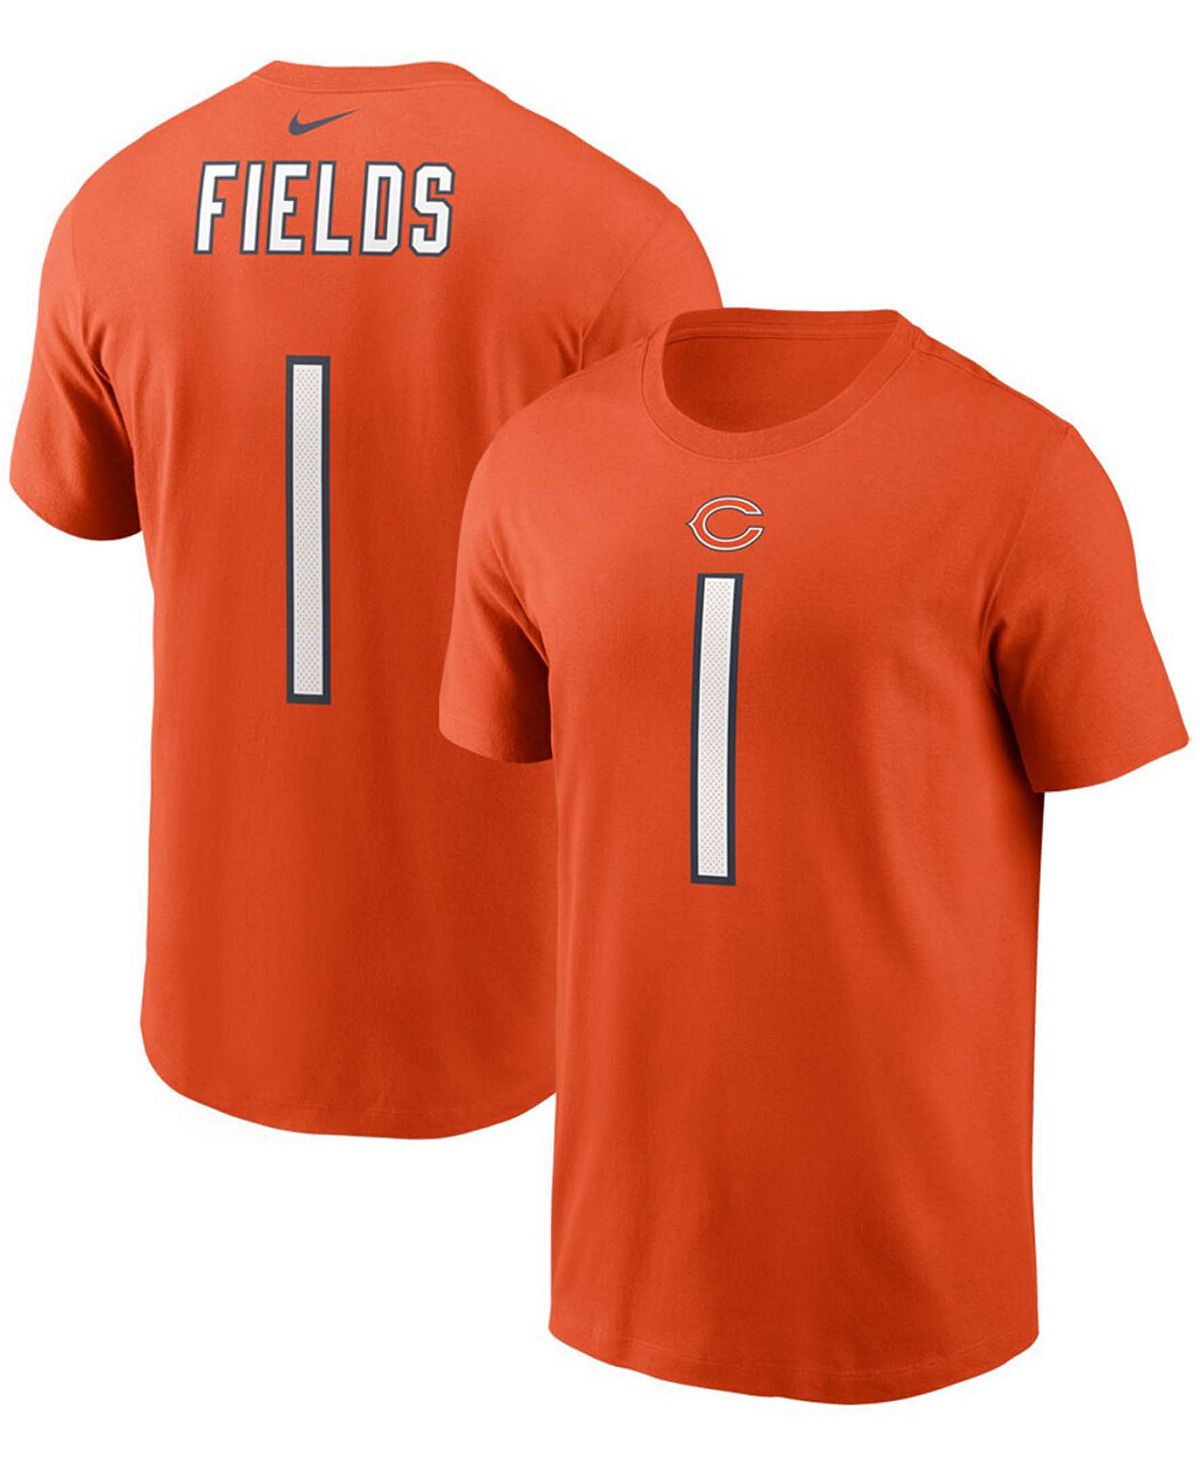 Мужская футболка justin fields orange chicago bears 2021 nfl draft first round pick player с именем и номером Nike